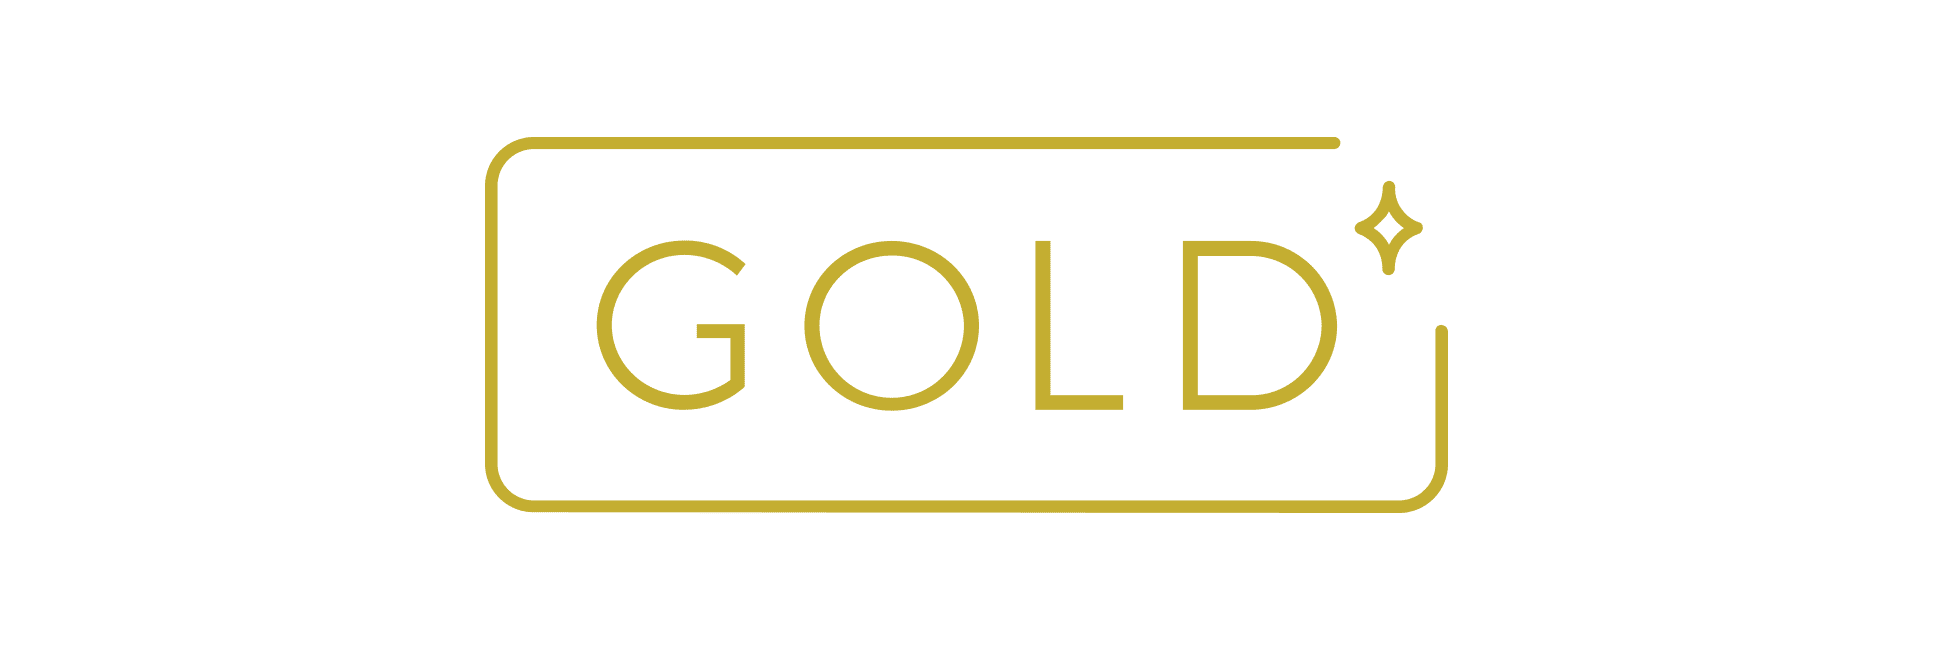 FilmFreeway Gold logo